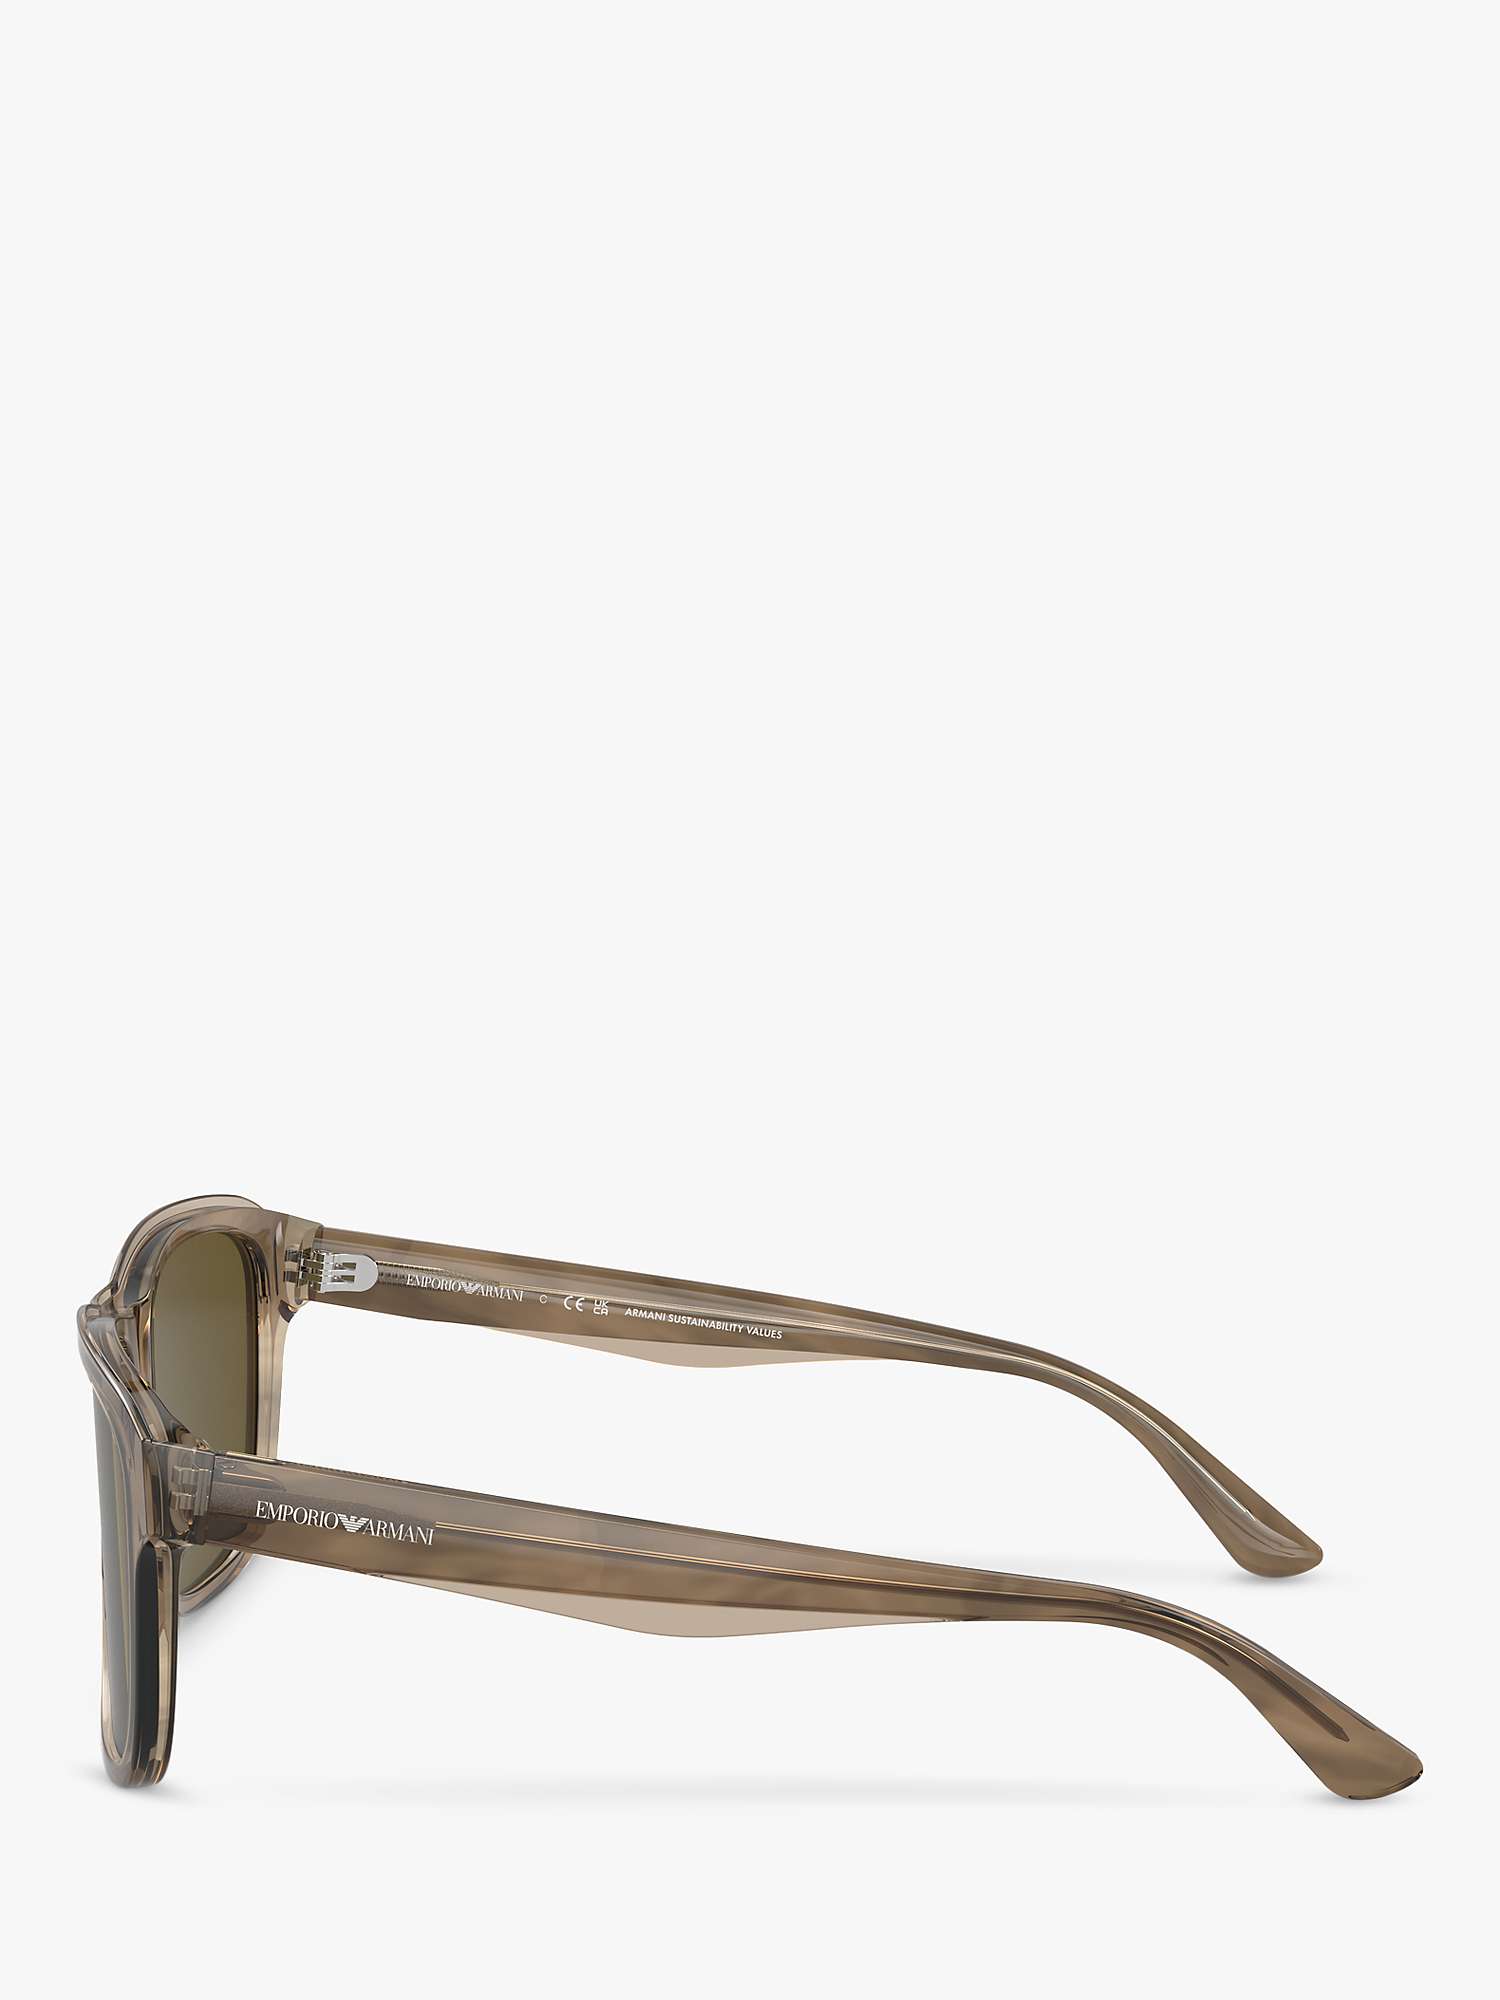 Buy Emporio Armani EA4208 Men's Pillow Sunglasses, Brown/Green Online at johnlewis.com